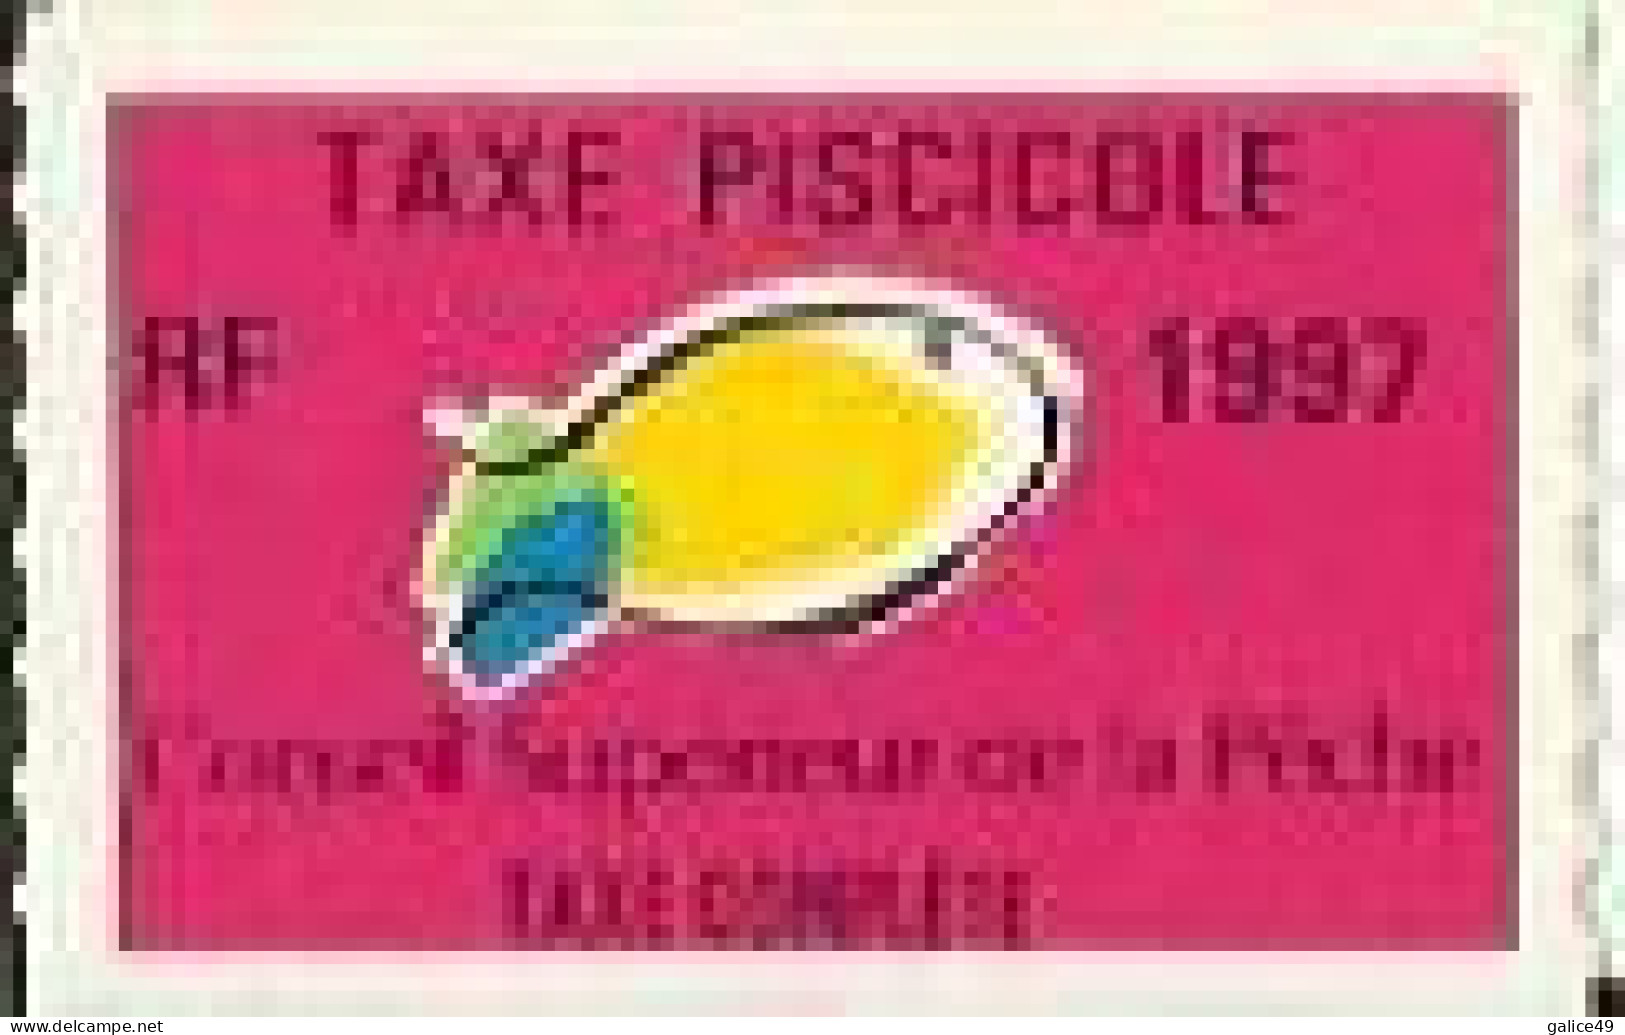 Taxe Piscicole Compète 1997 - Vierge - Other & Unclassified